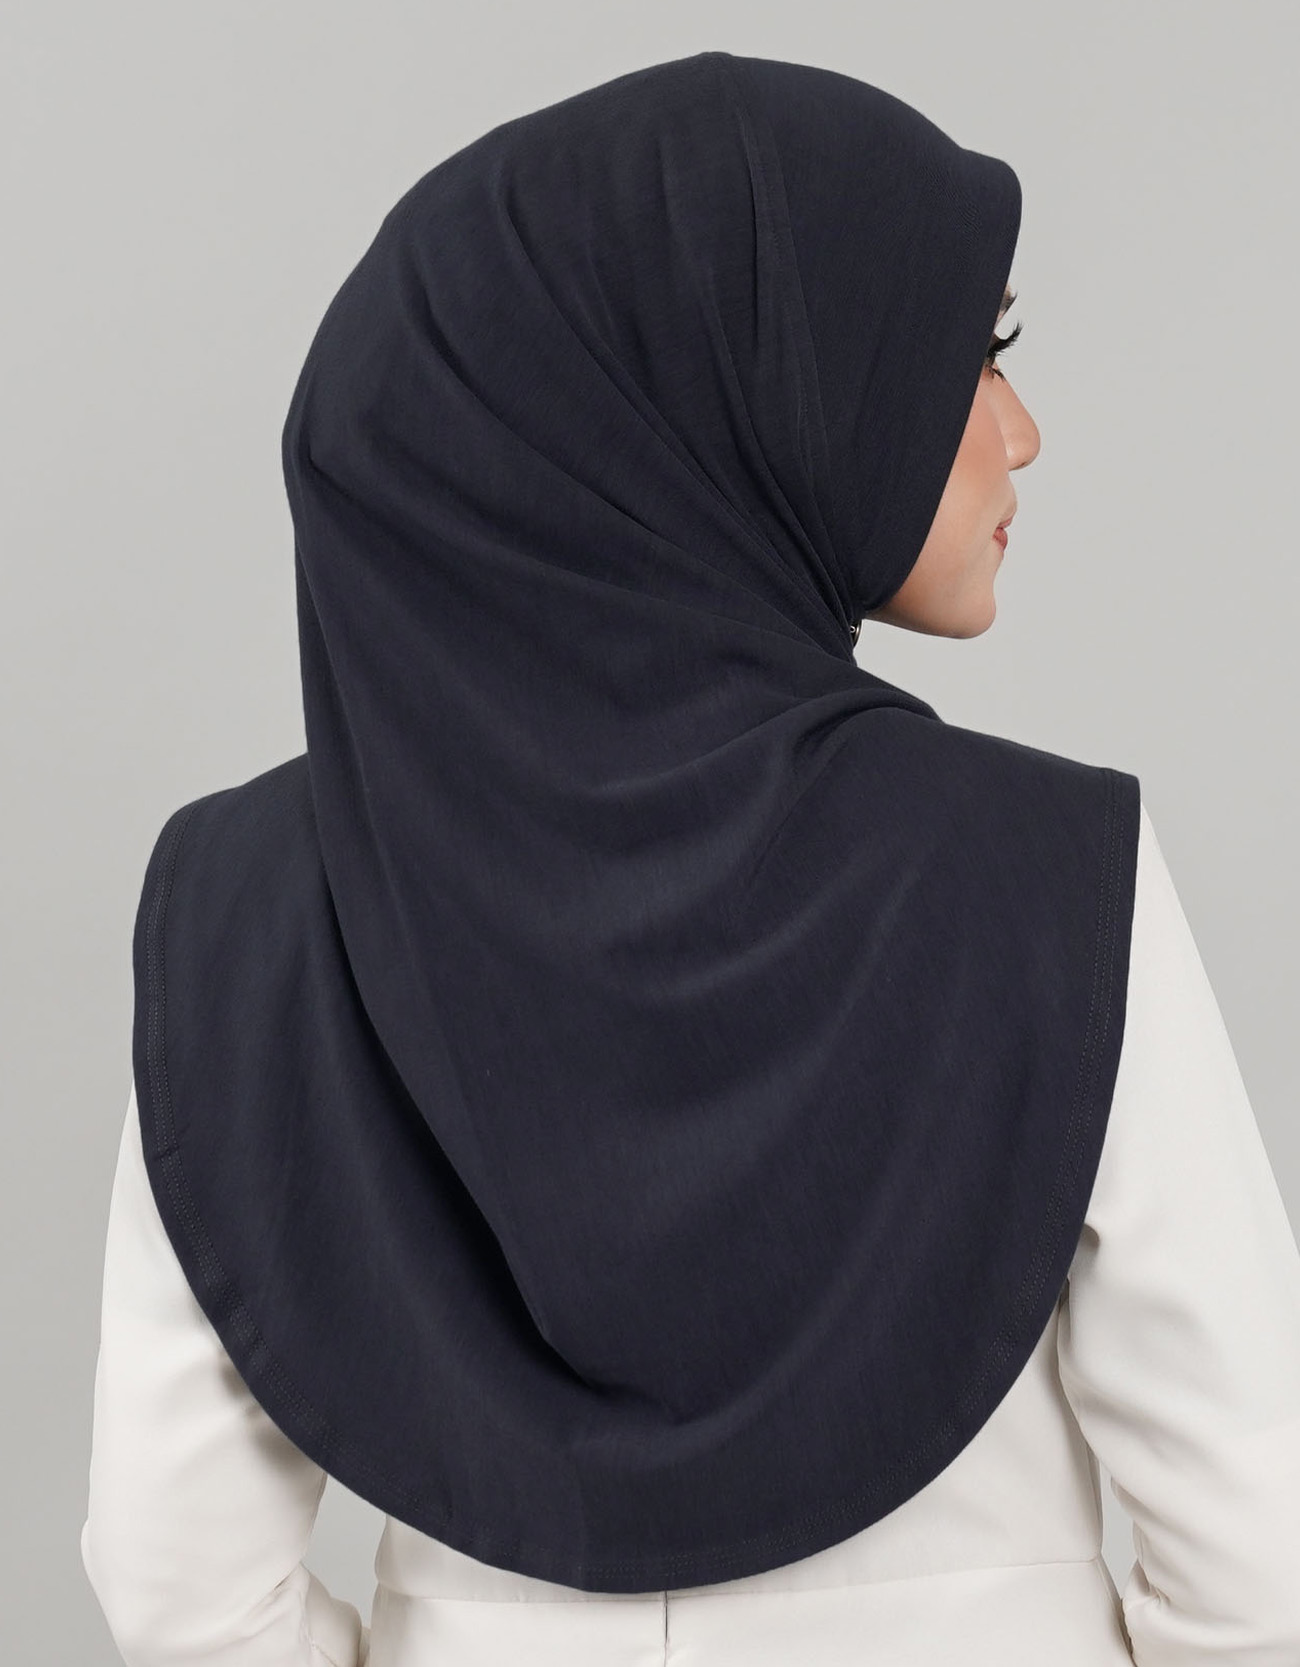 Express Hijab Damia Plain - 04 Night Blue